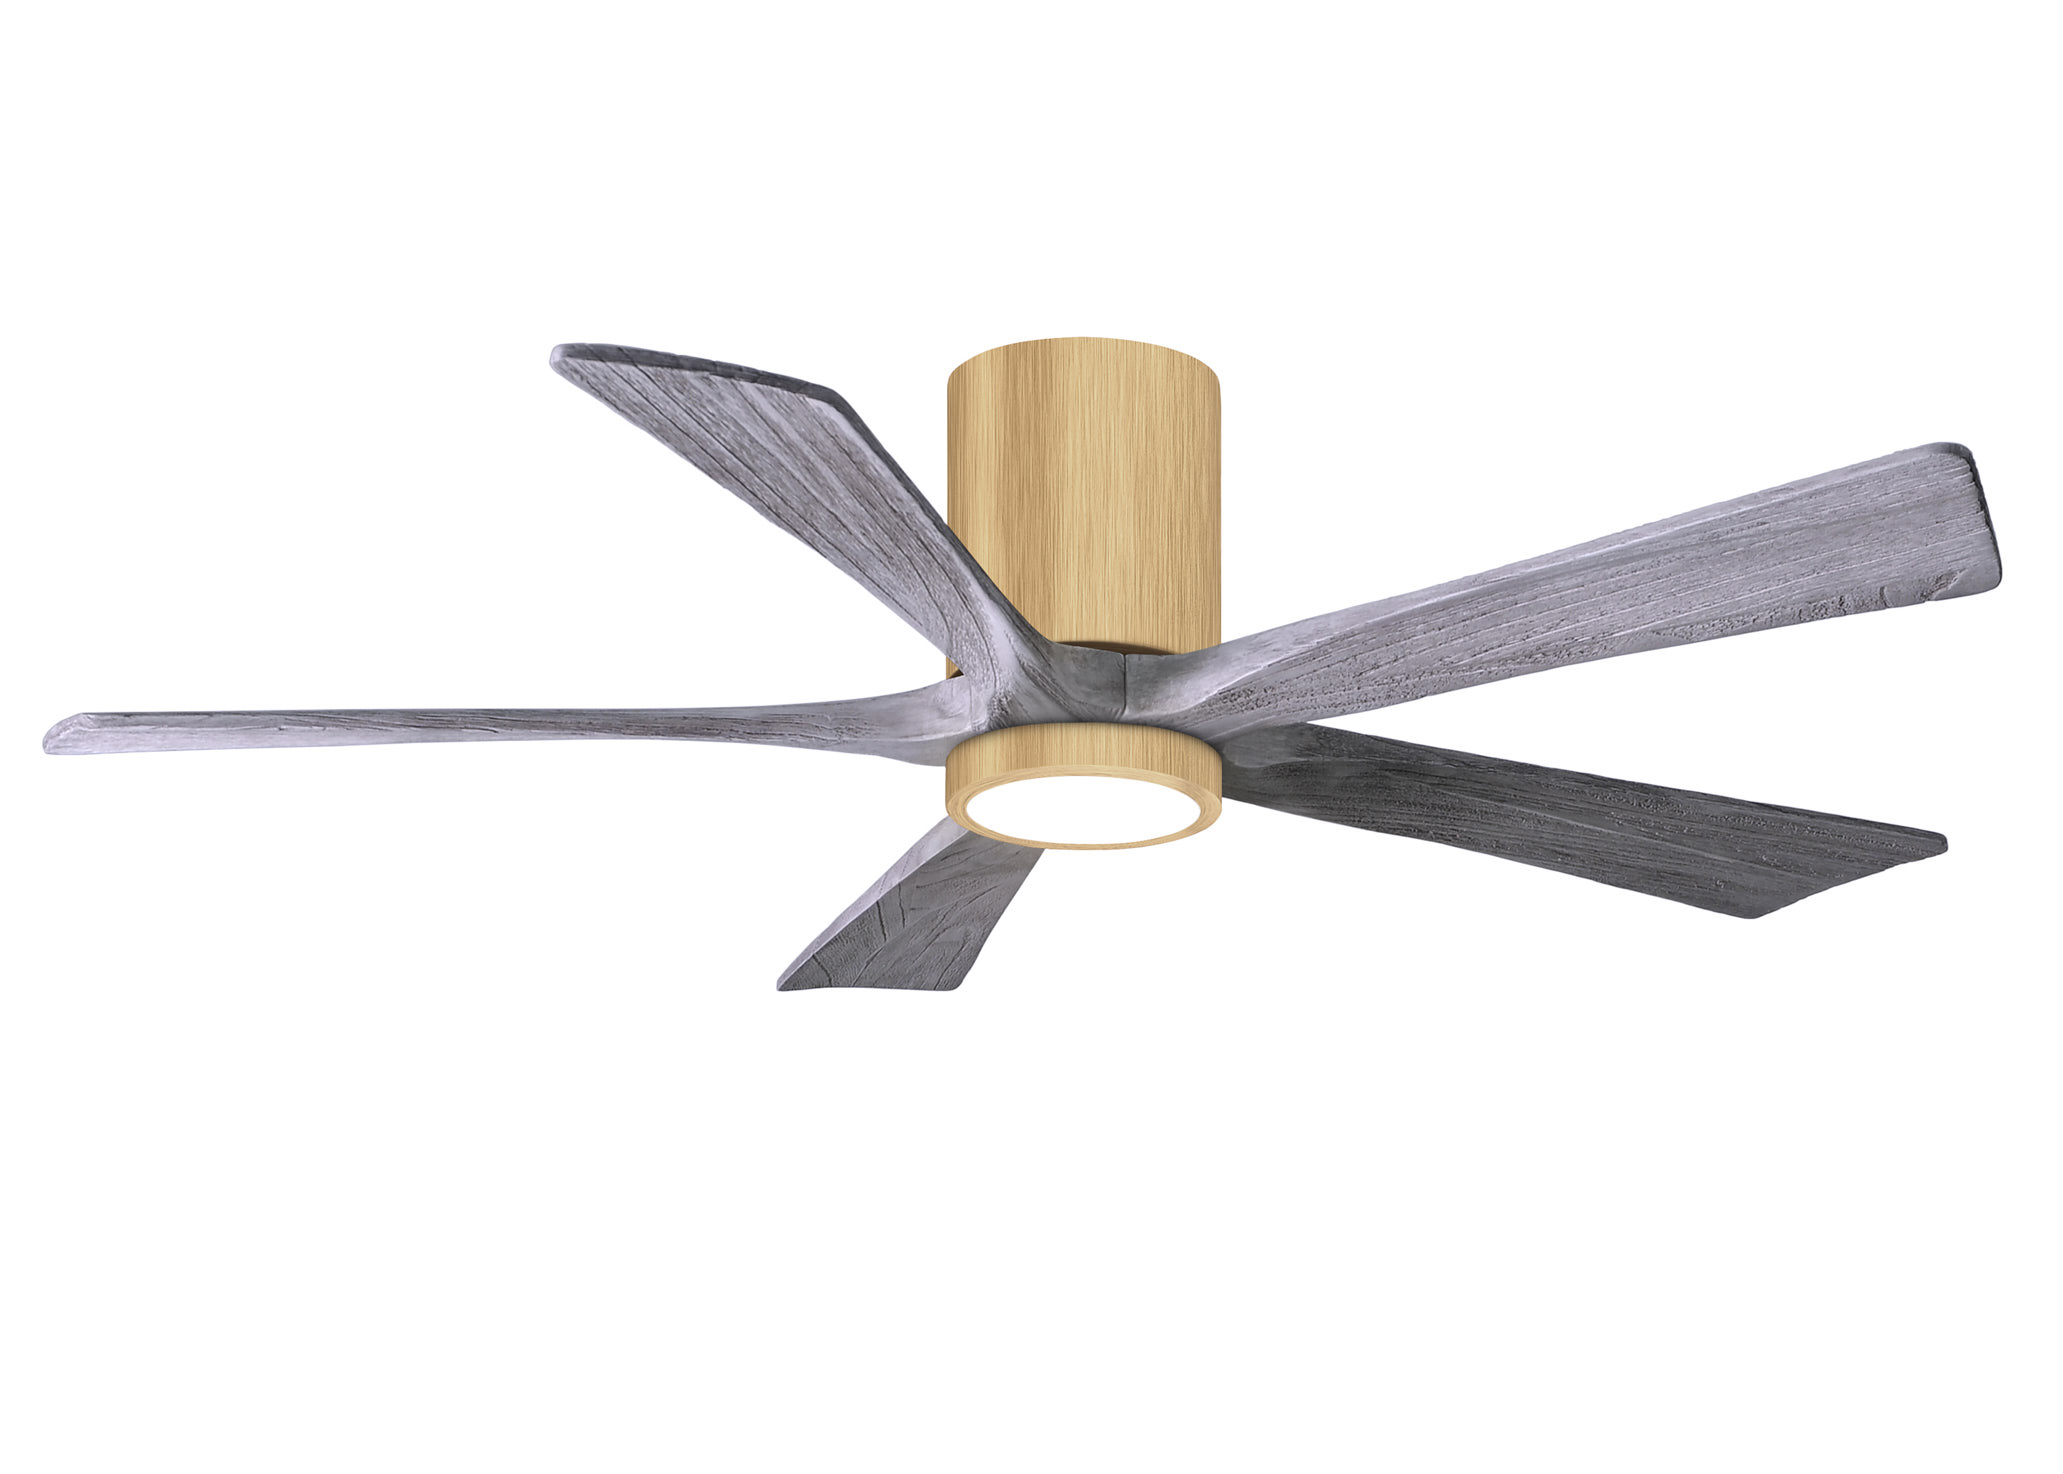 Irene-5HLK 6-speed ceiling fan in light maple finish with 52